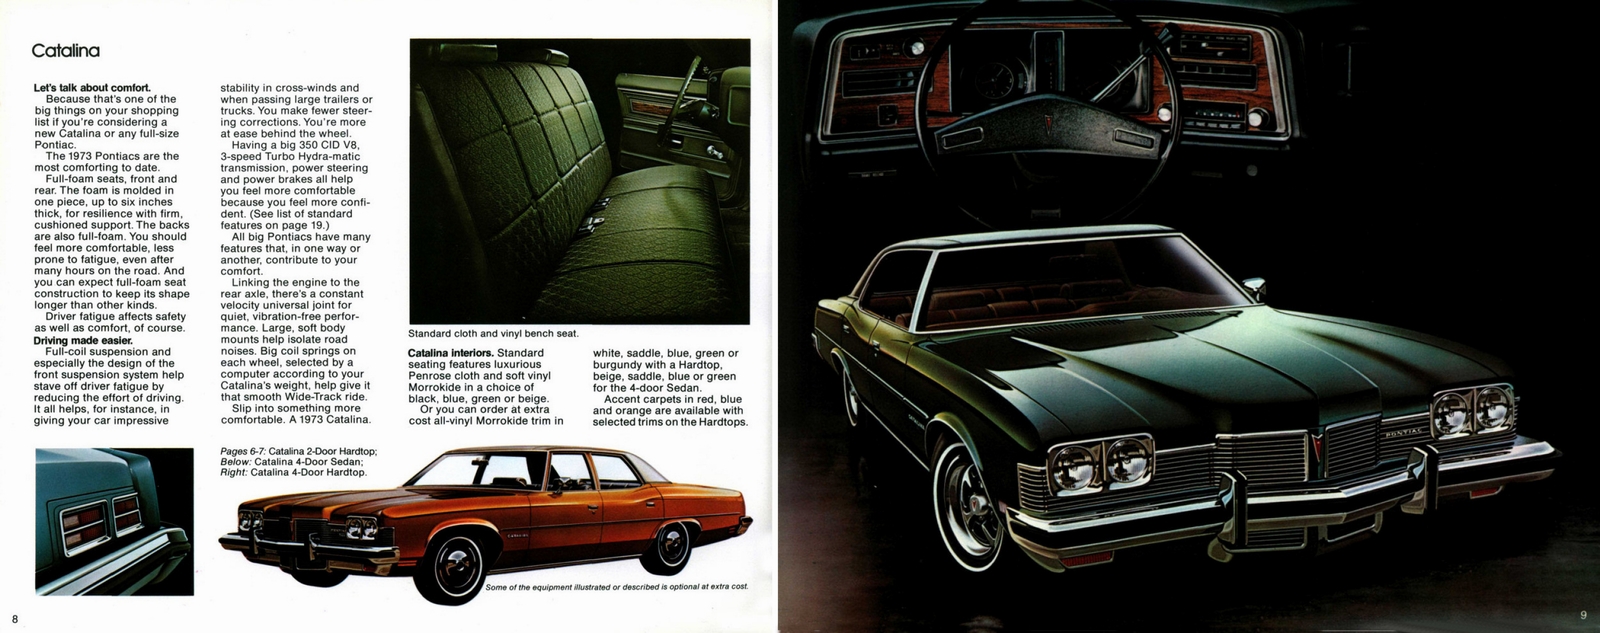 n_1973 Pontiac Full Size (Cdn)-08-09.jpg